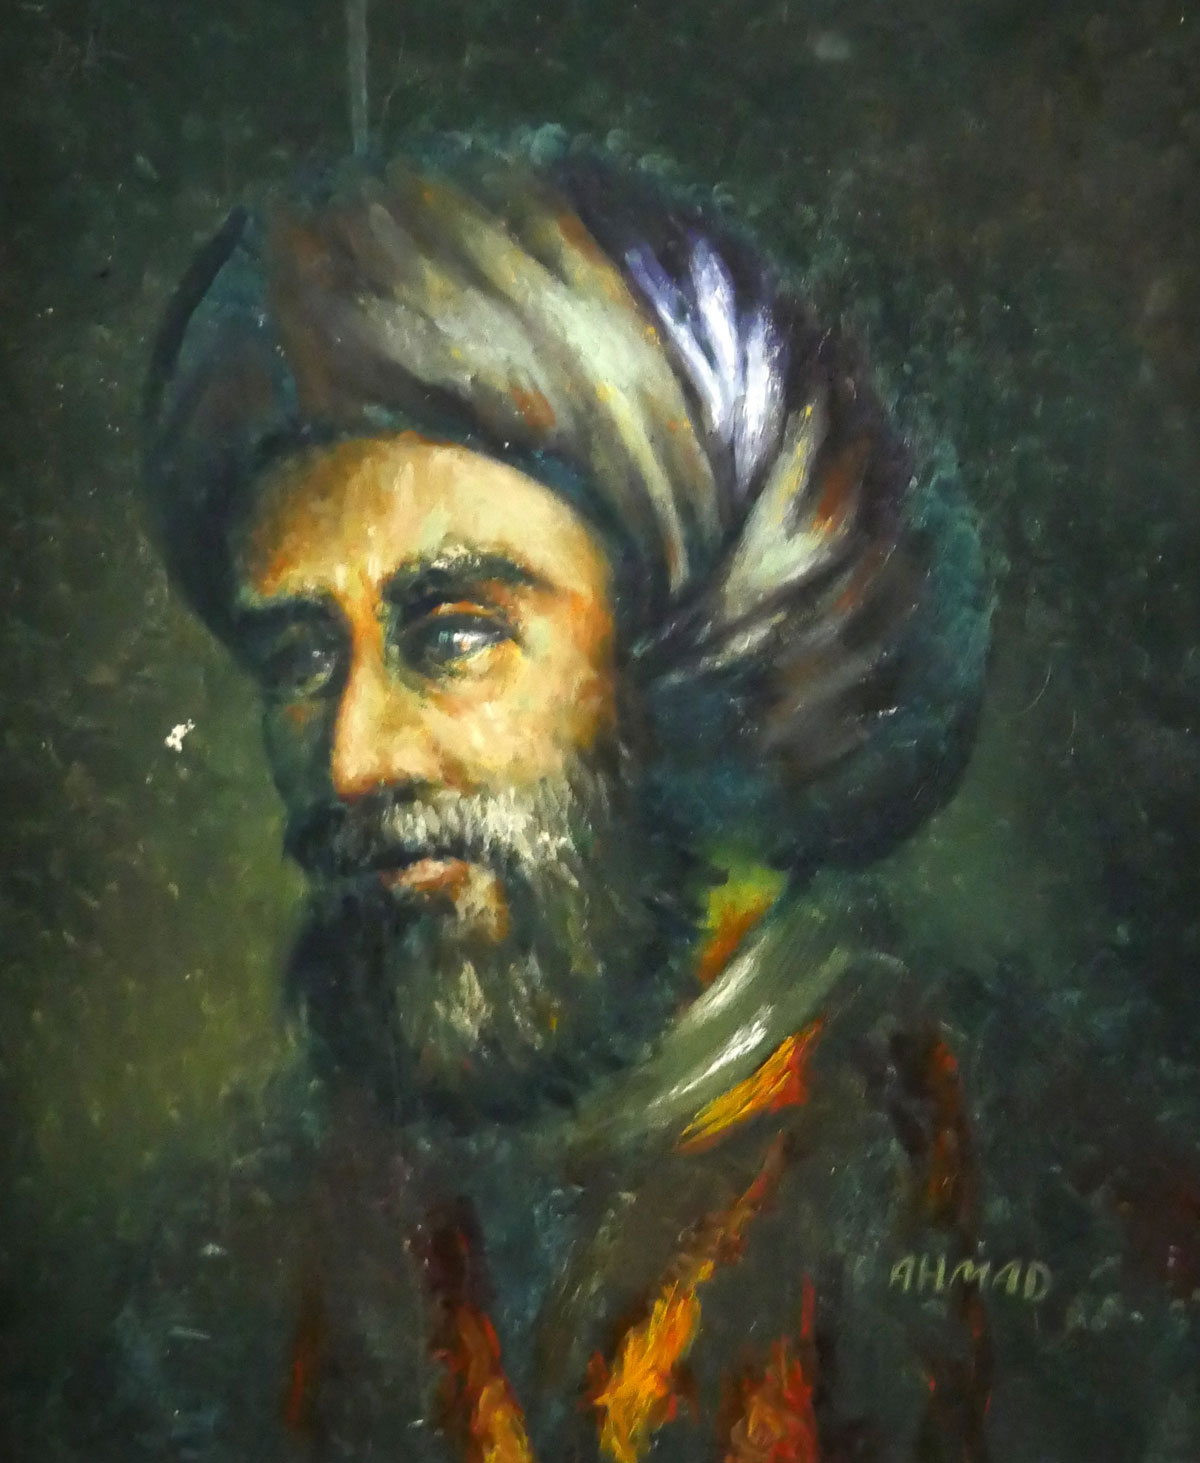 Potret Muhammad ibn Musa al-Khwarizmi (Latin sebagai Algorithmi) seorang sarjana Persia yang menghasilkan karya di bidang matematika, astronomi, dan geografi.